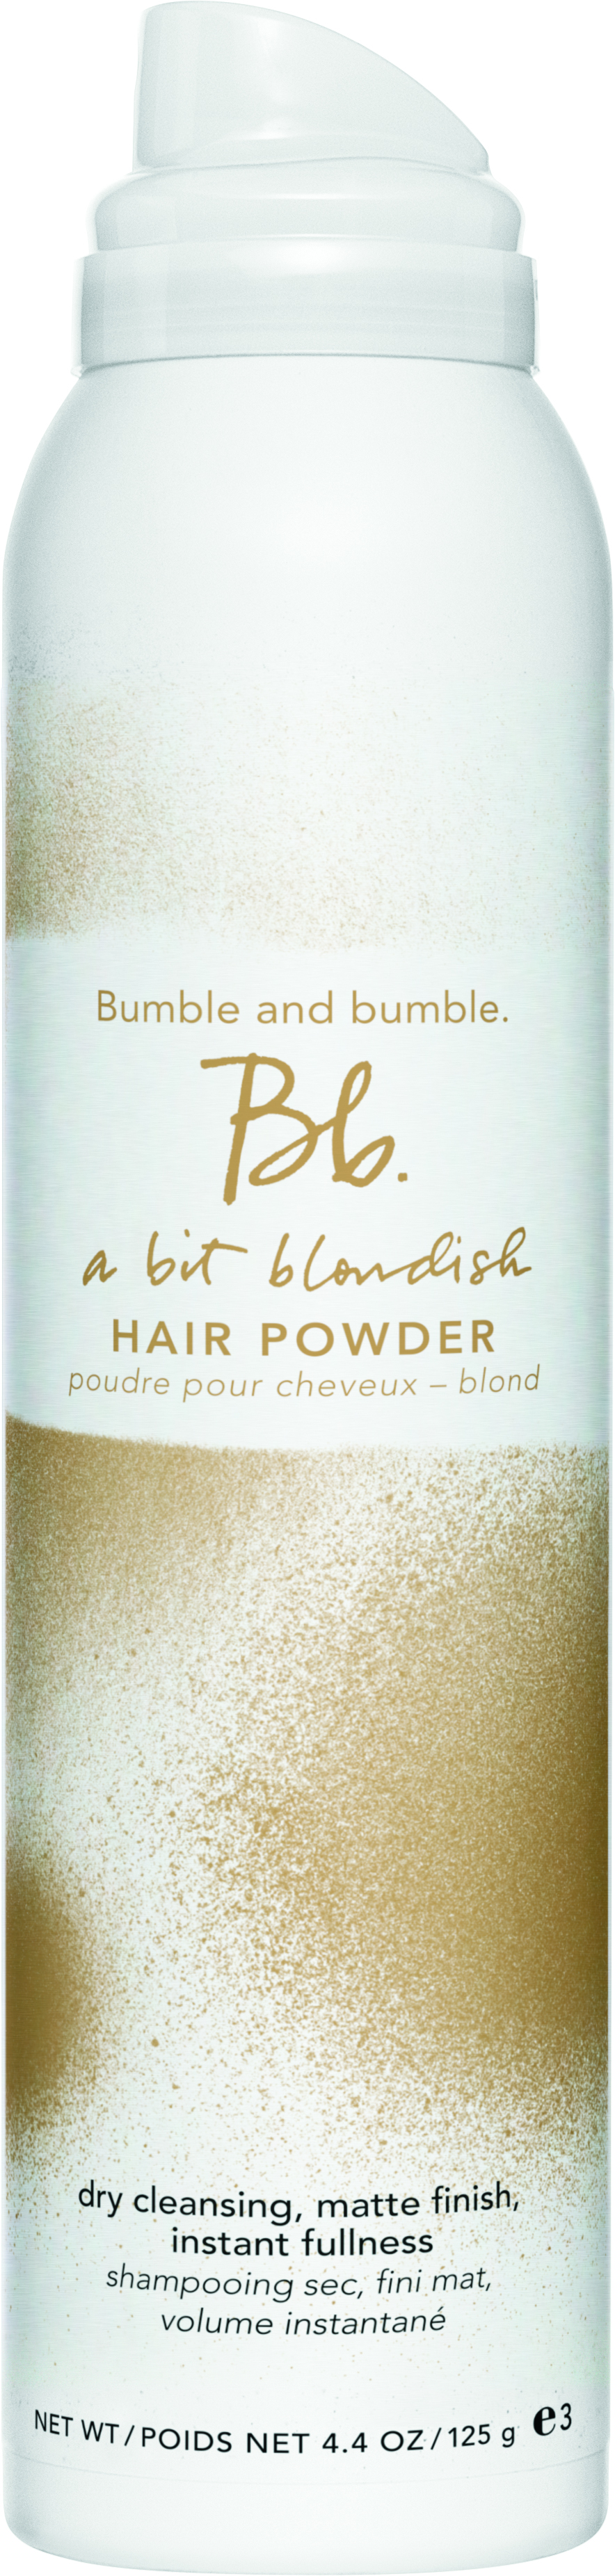 Bumble and bumble Blondish Hair Powder 125g